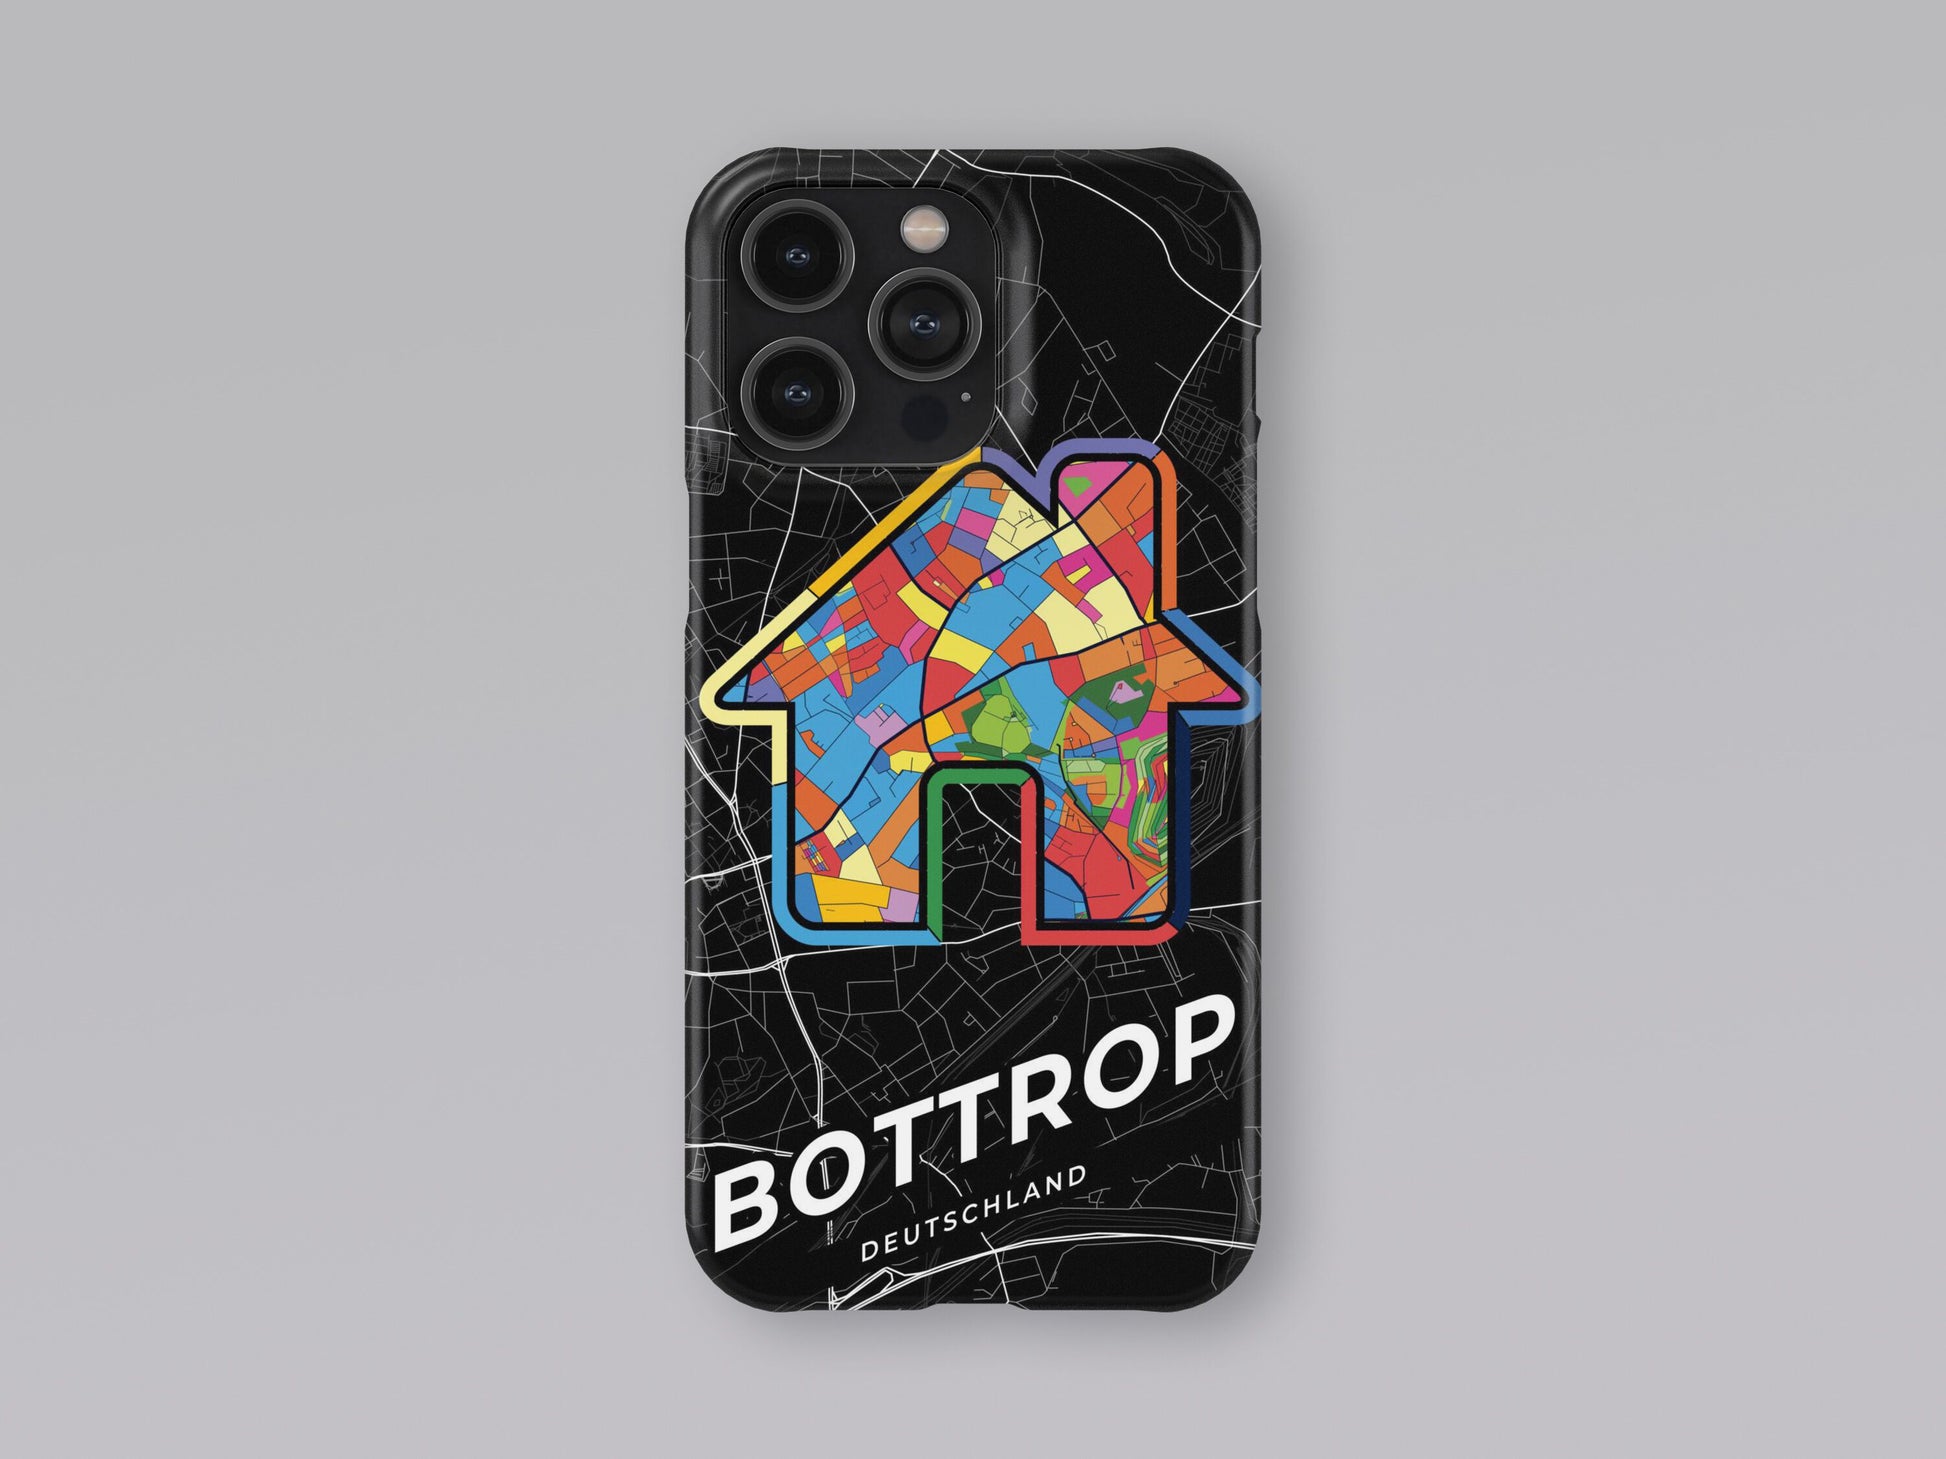 Bottrop Deutschland slim phone case with colorful icon. Birthday, wedding or housewarming gift. Couple match cases. 3